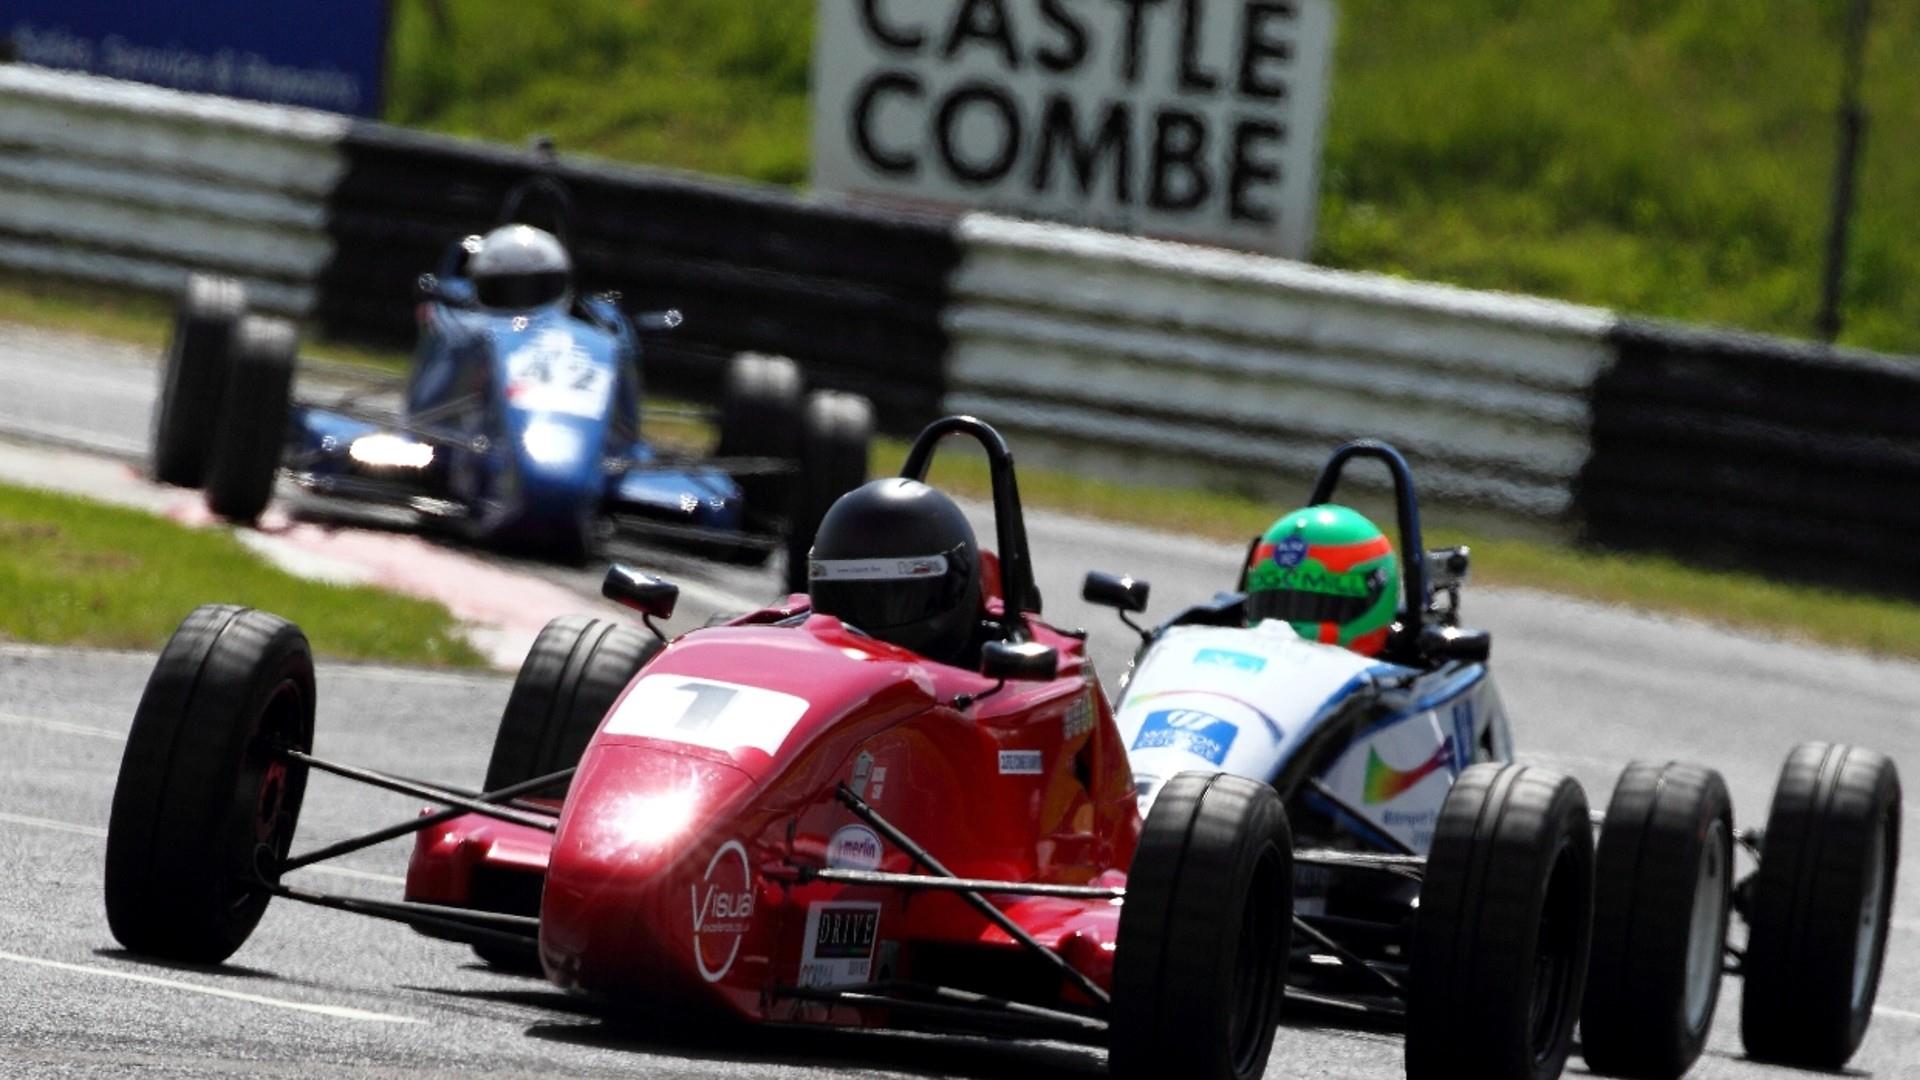 Castle Combe Formula Fords Championships